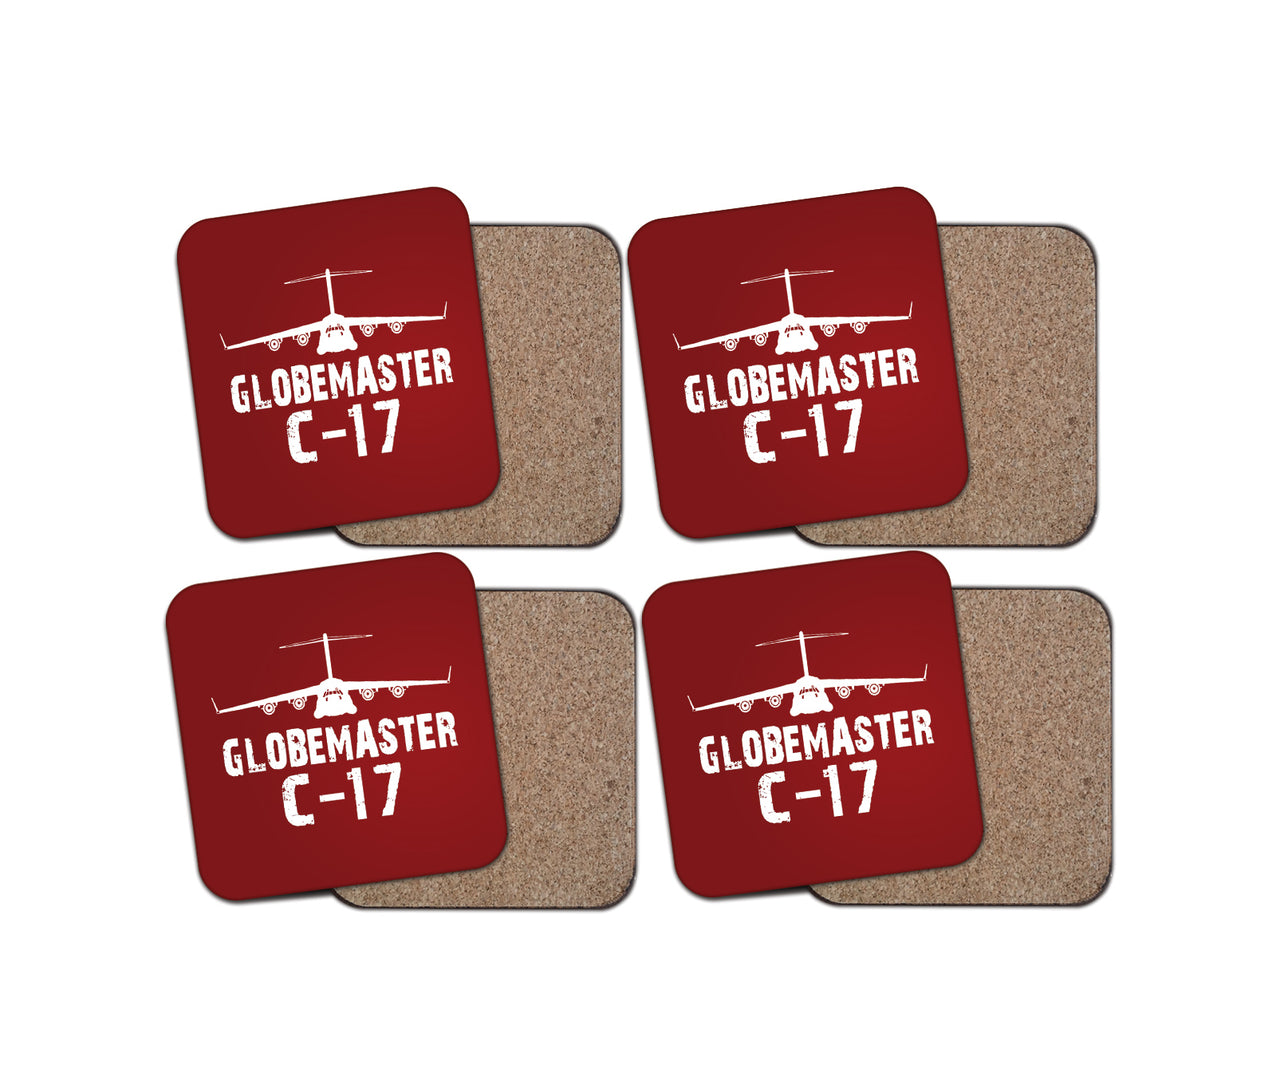 GlobeMaster C-17 & Plane Designed Coasters